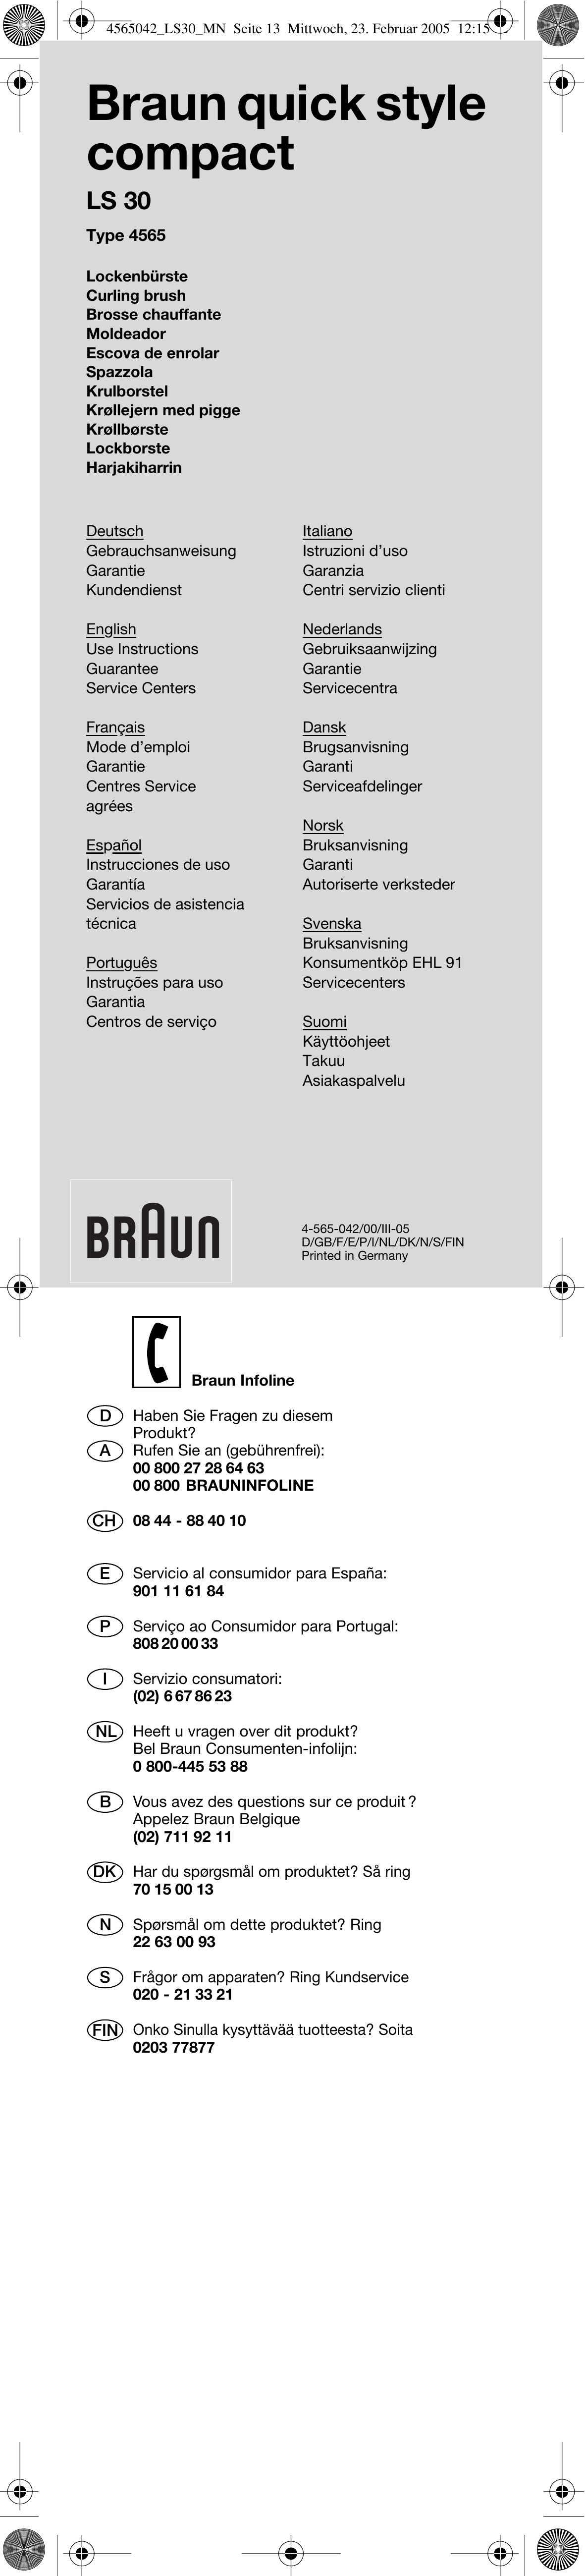 Braun LS 30 Bathroom Aids User Manual (Page 1)